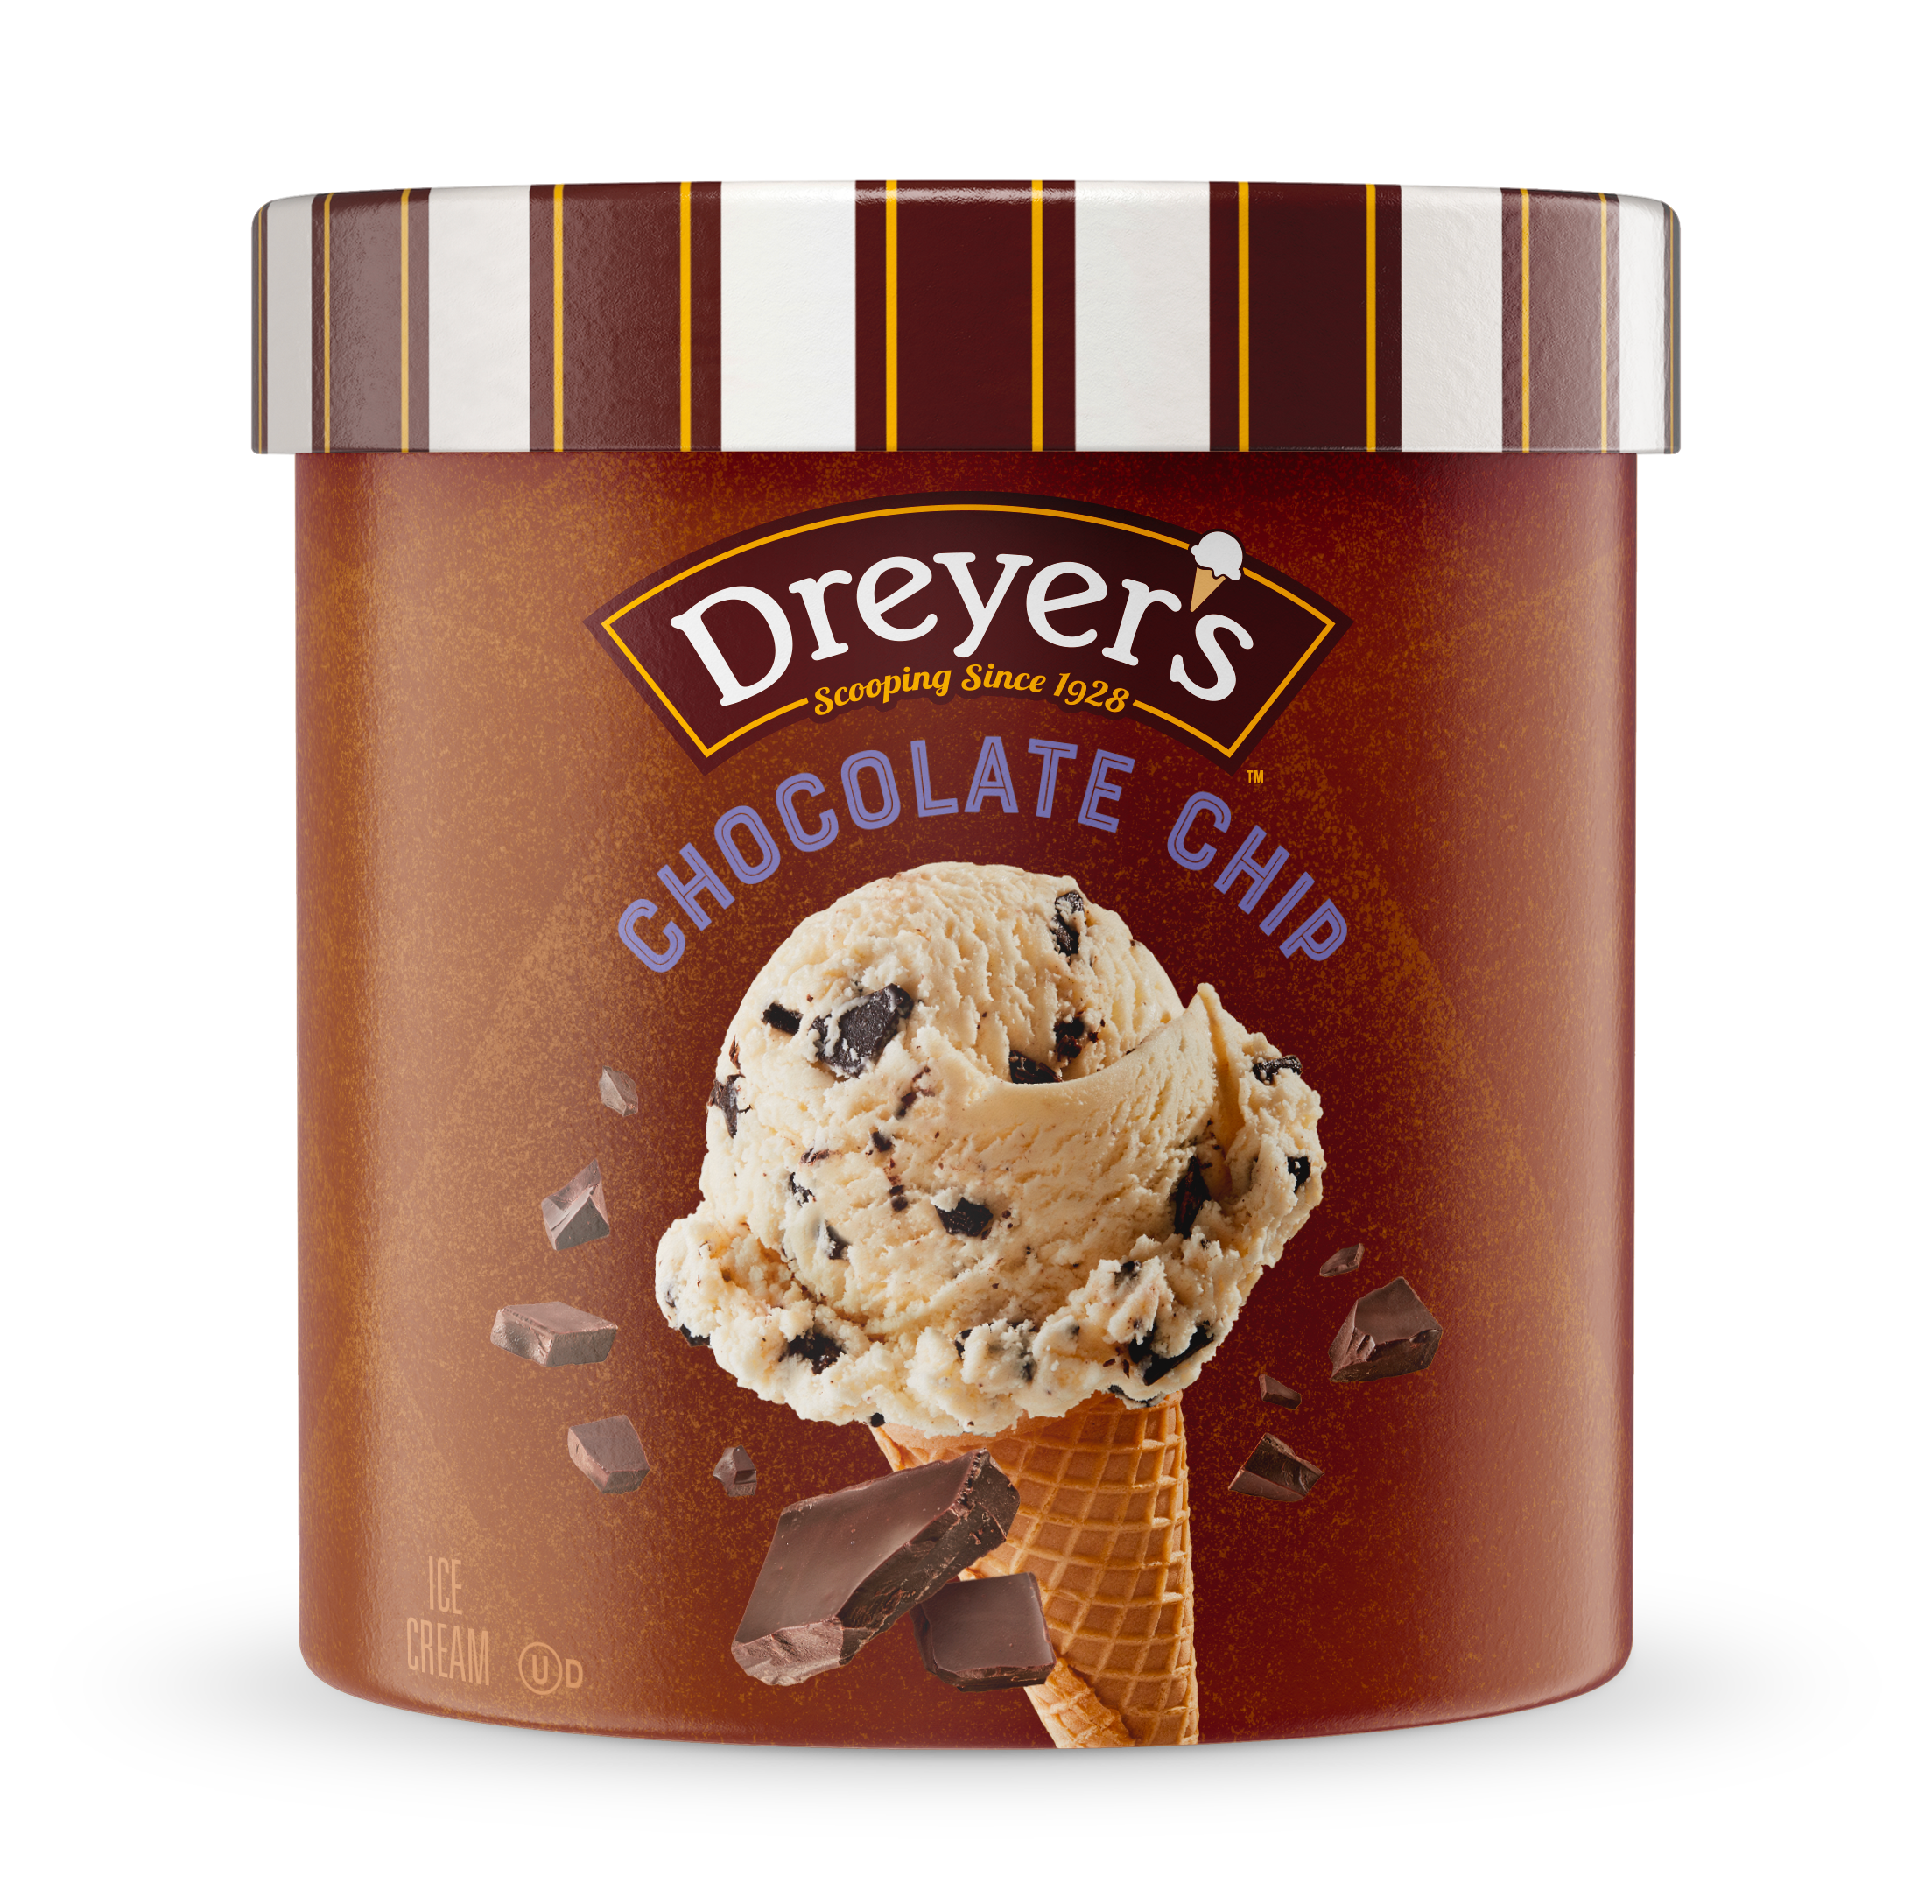 Carton of Dreyer's chocolate chip ice cream